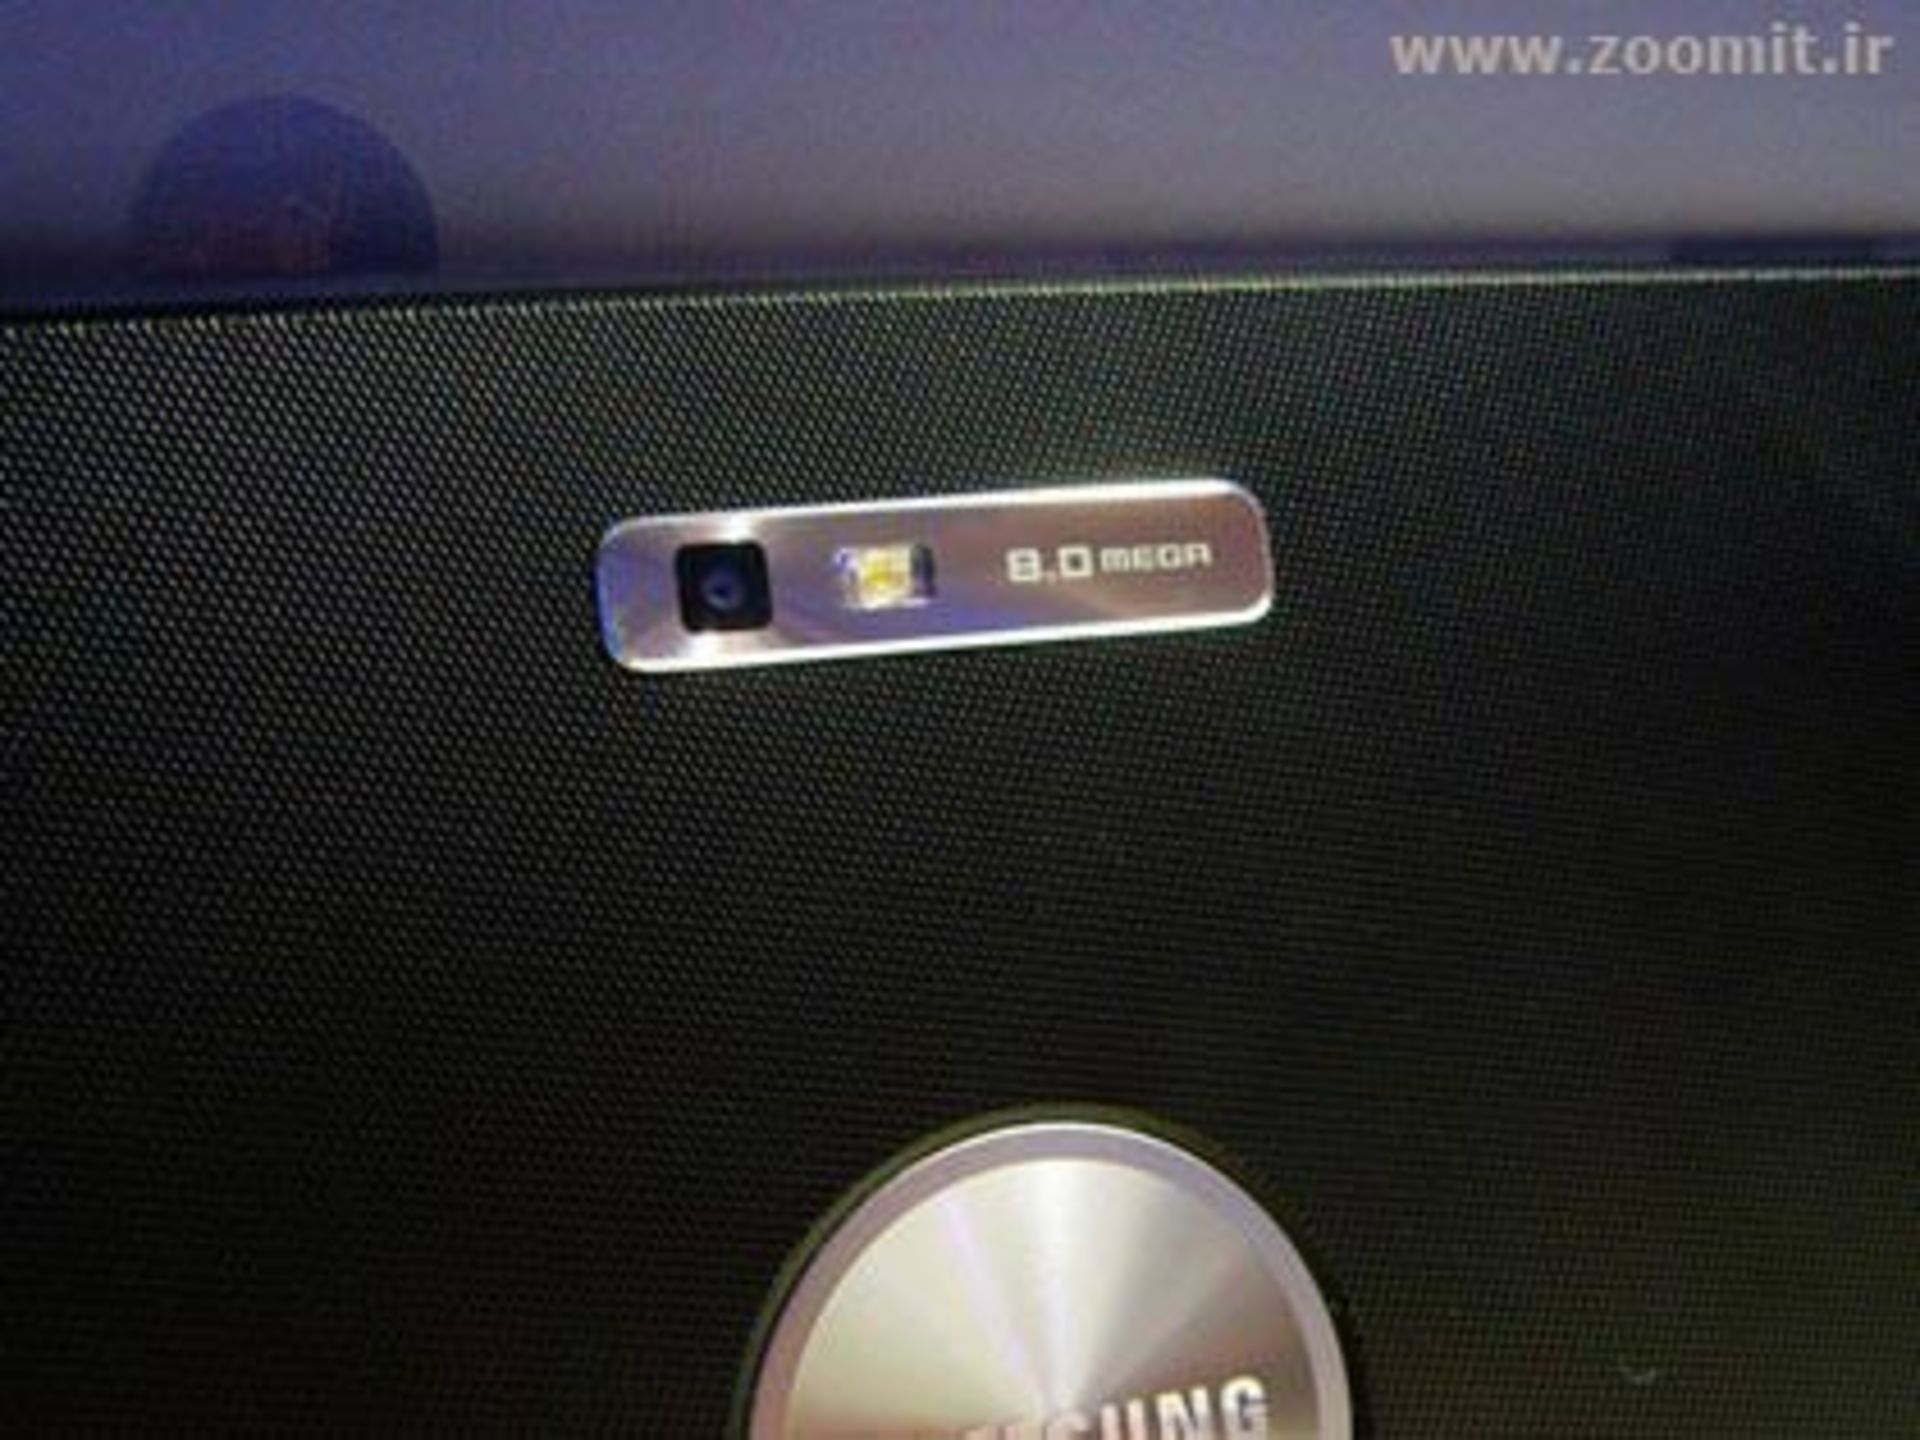 Samsung_Galaxy_Tab_101_review_20-420-90